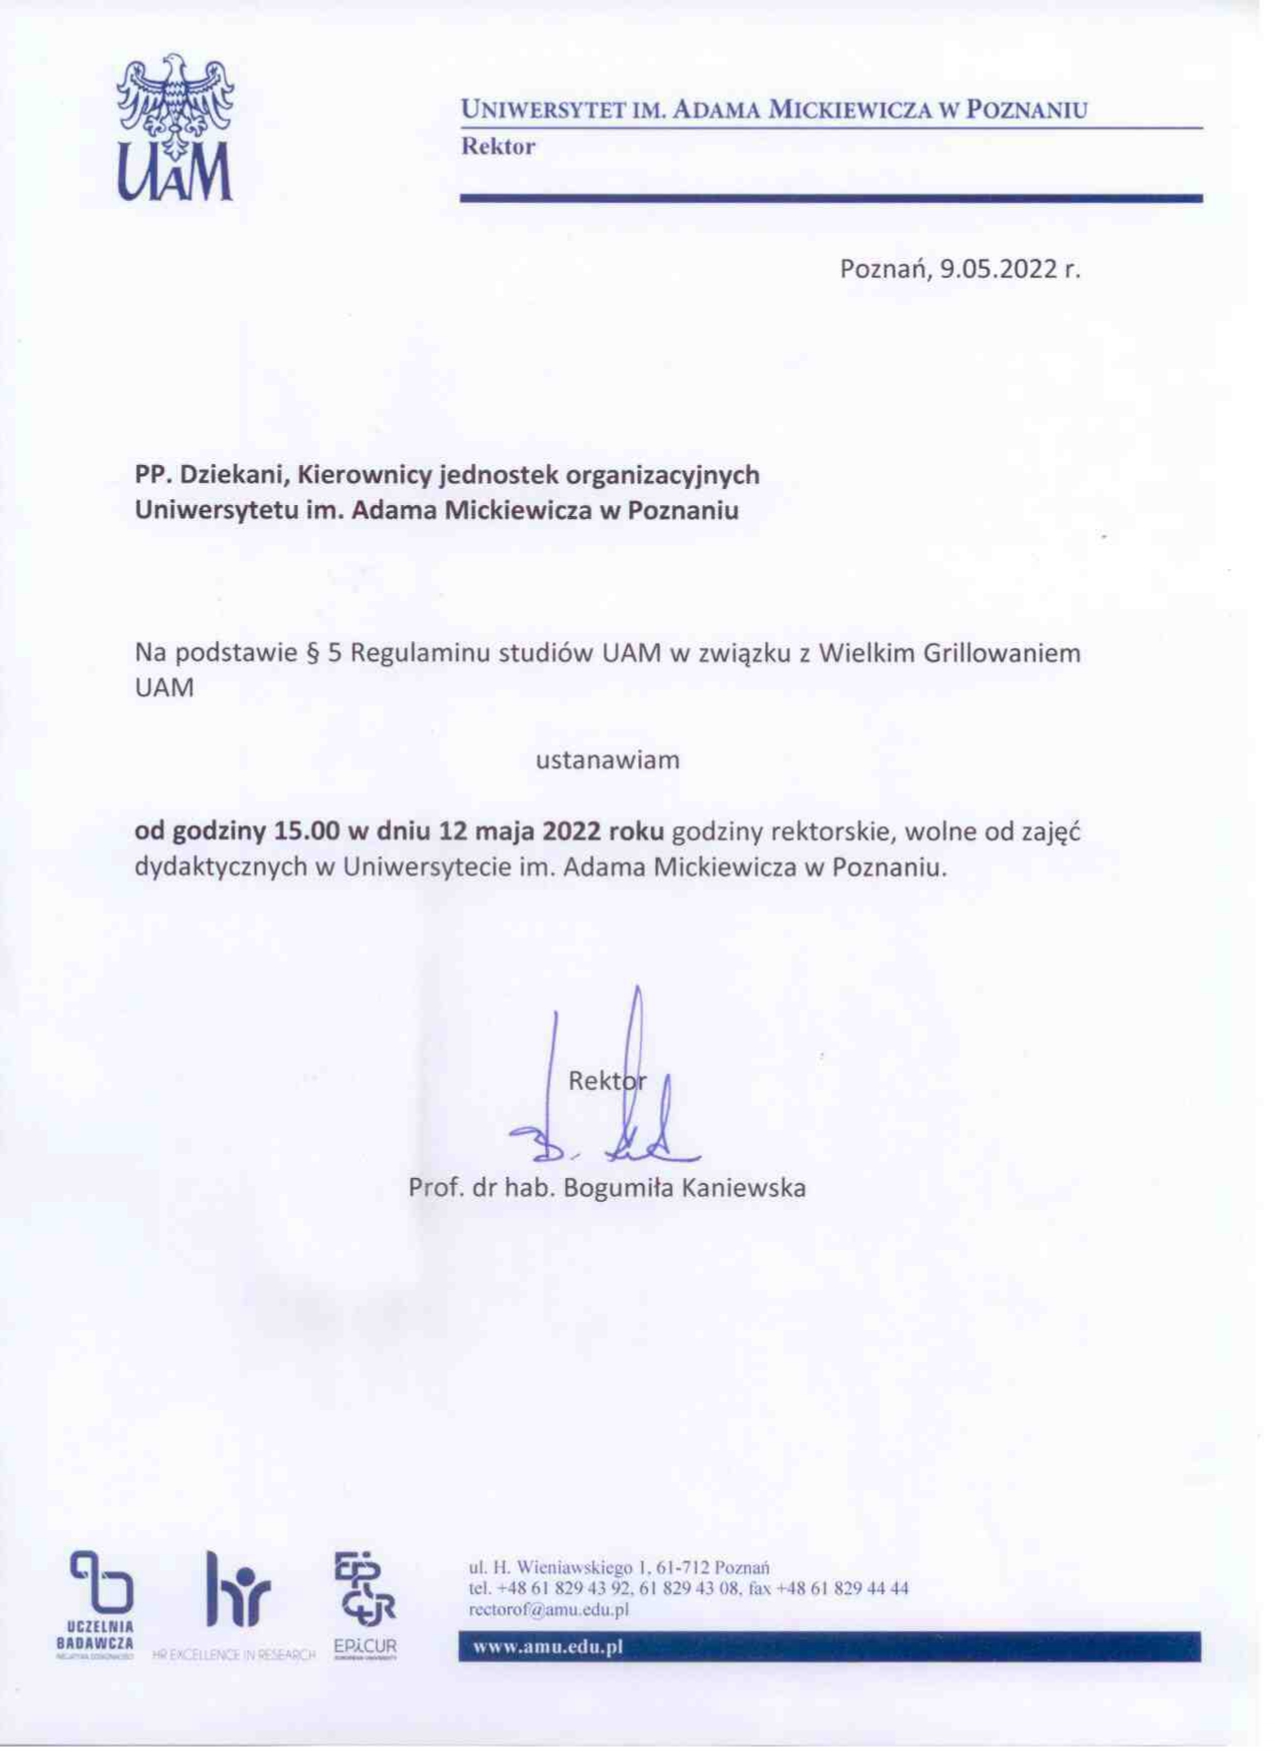 dokument godziny rektorskie 12.05 od 15:00